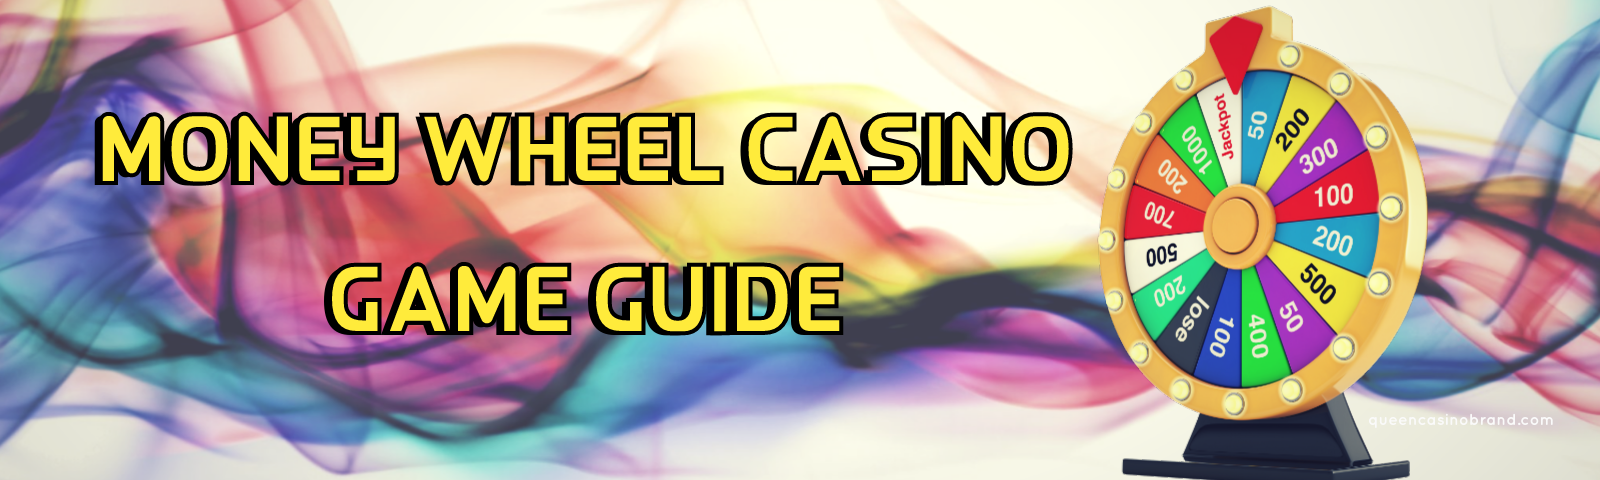 Money Wheel Casino Game Guide